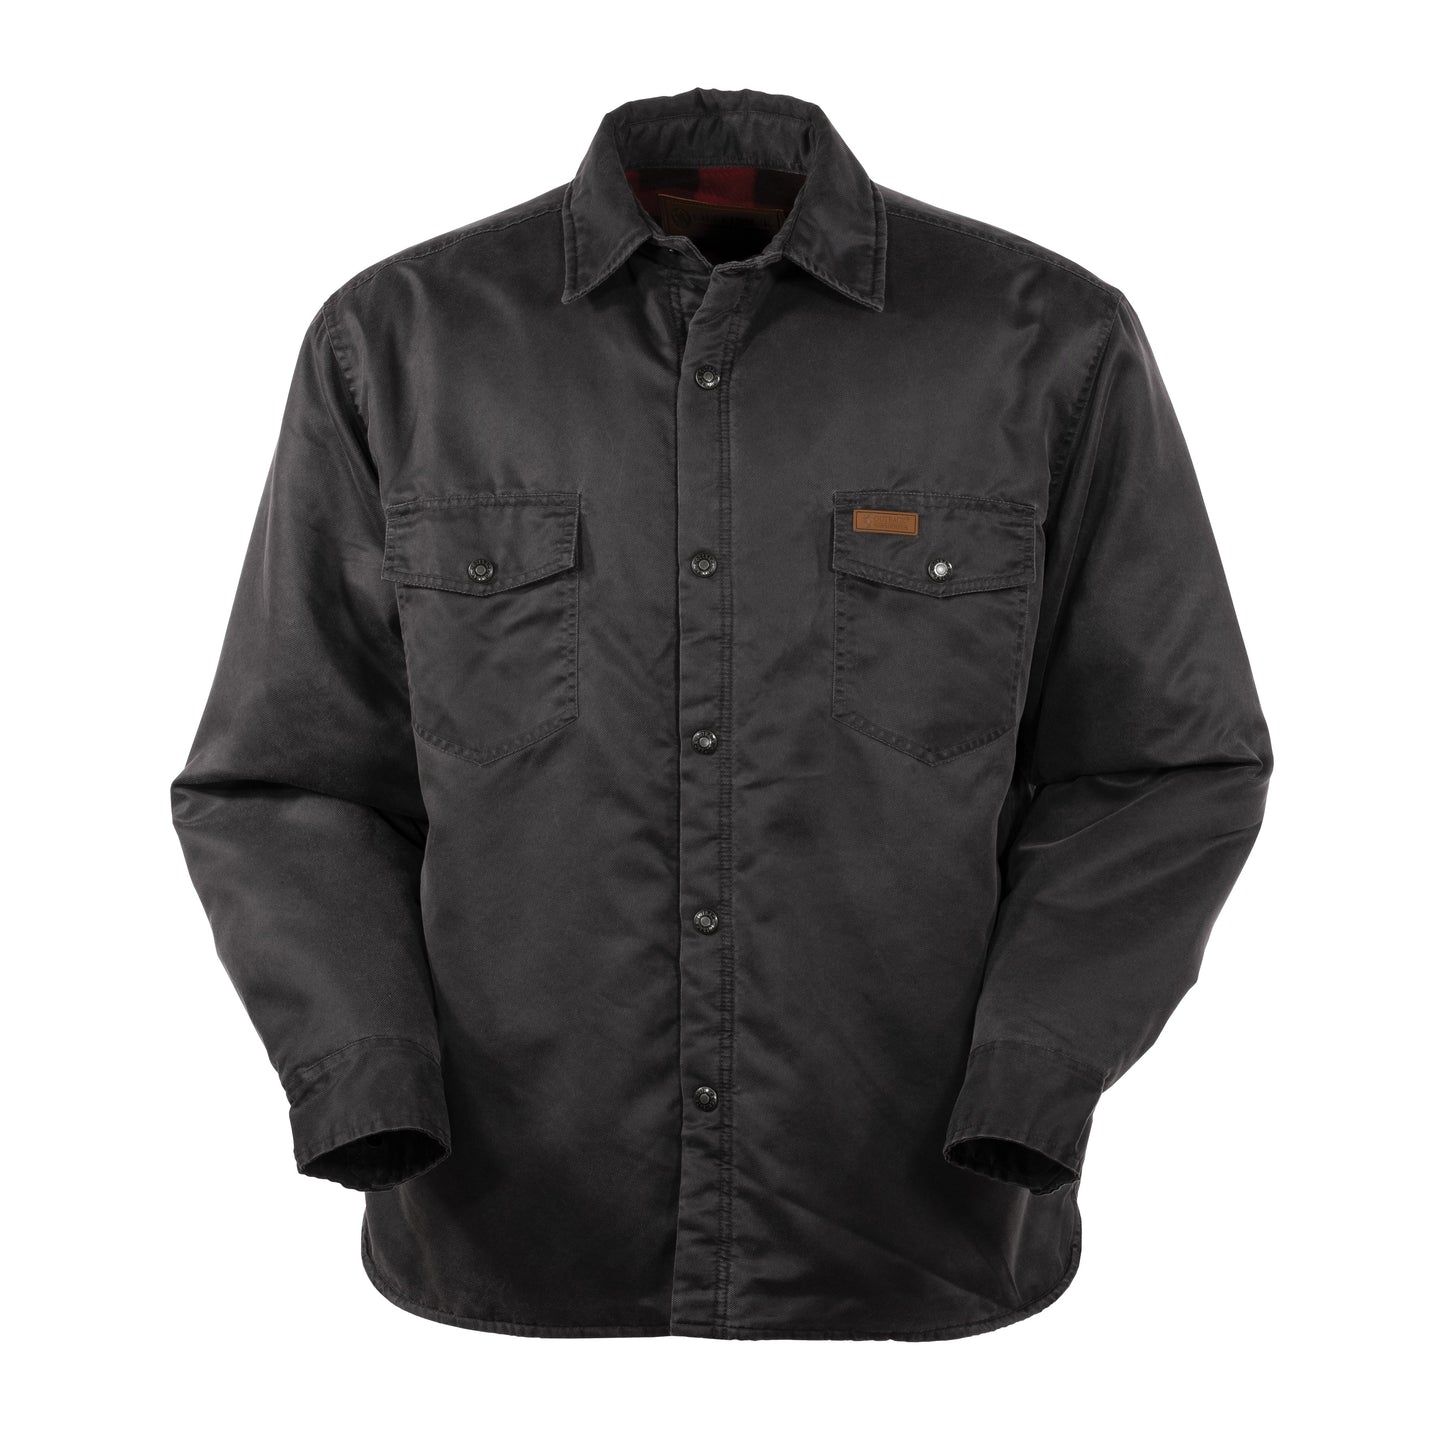 Outback Trading Company® Men's Loxton Iron Jacket 2875-IRN